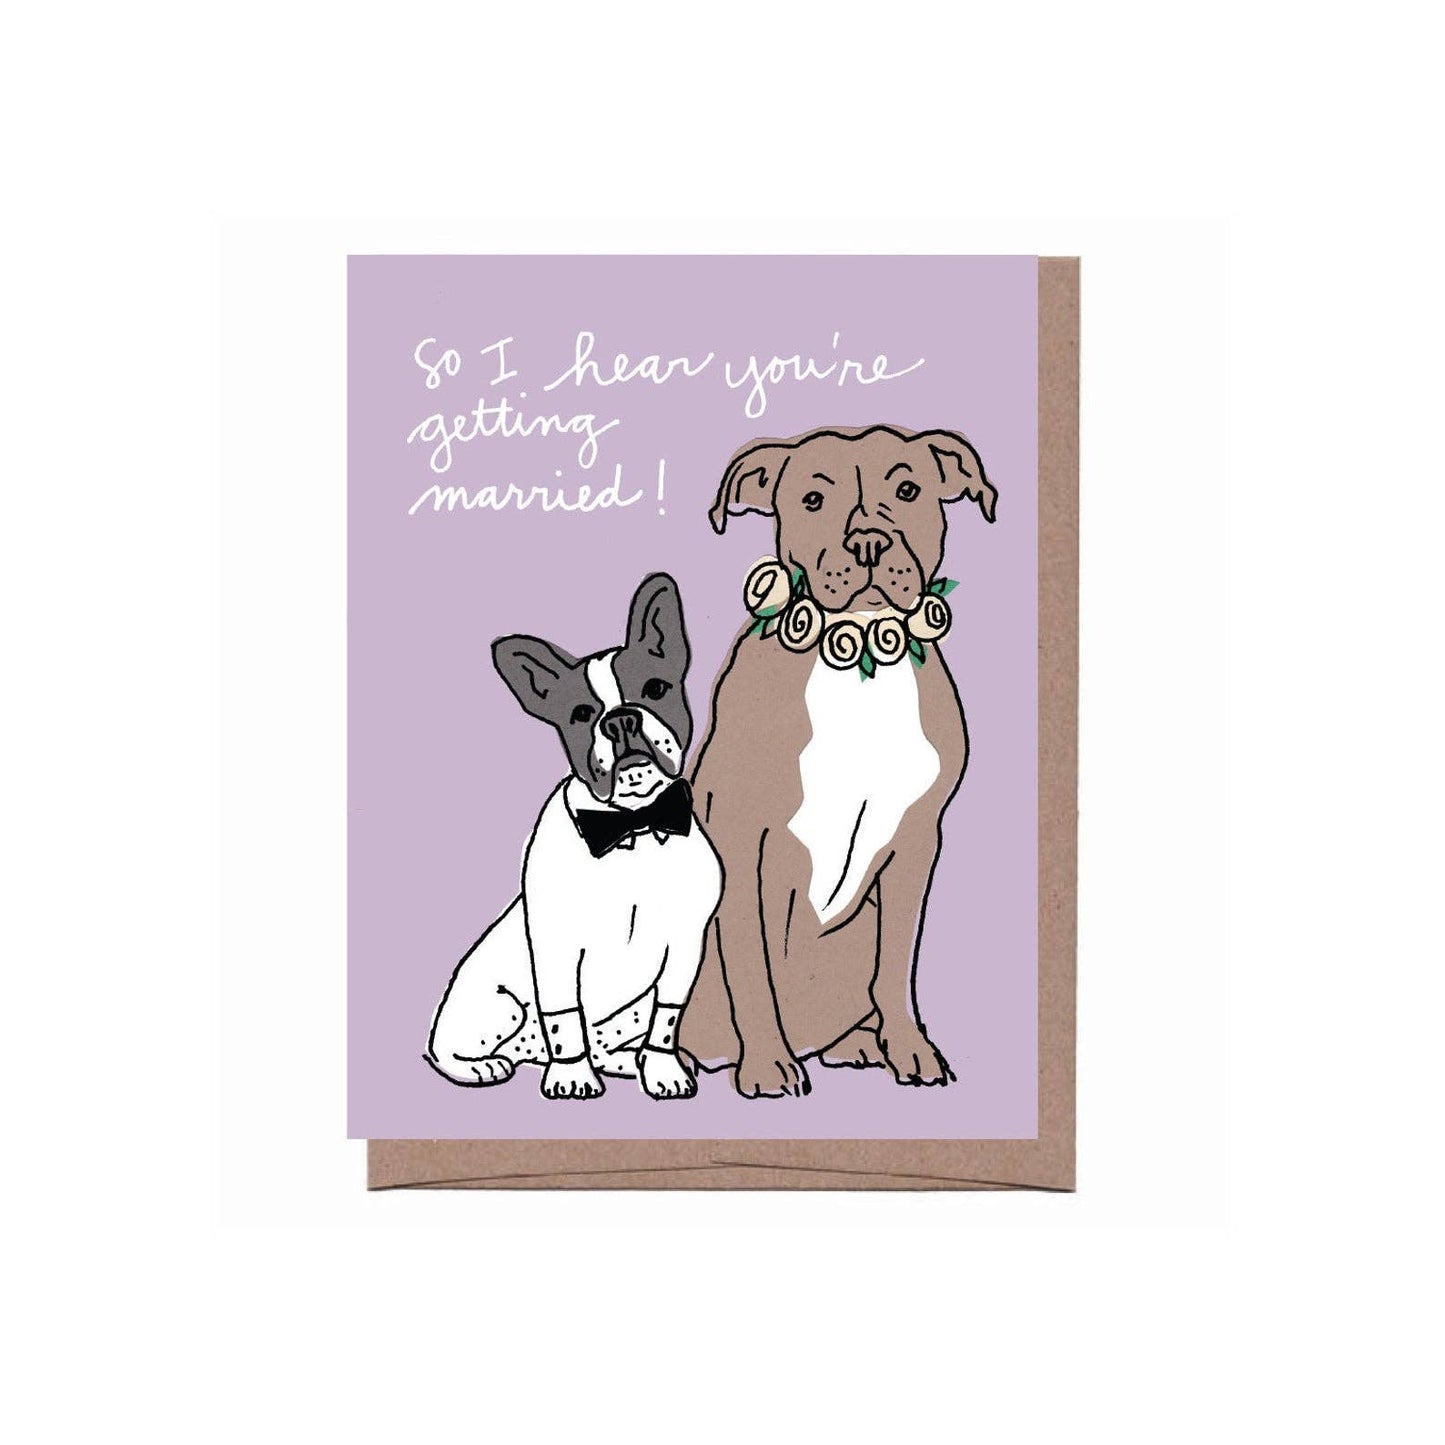 Wedding Dogs Card